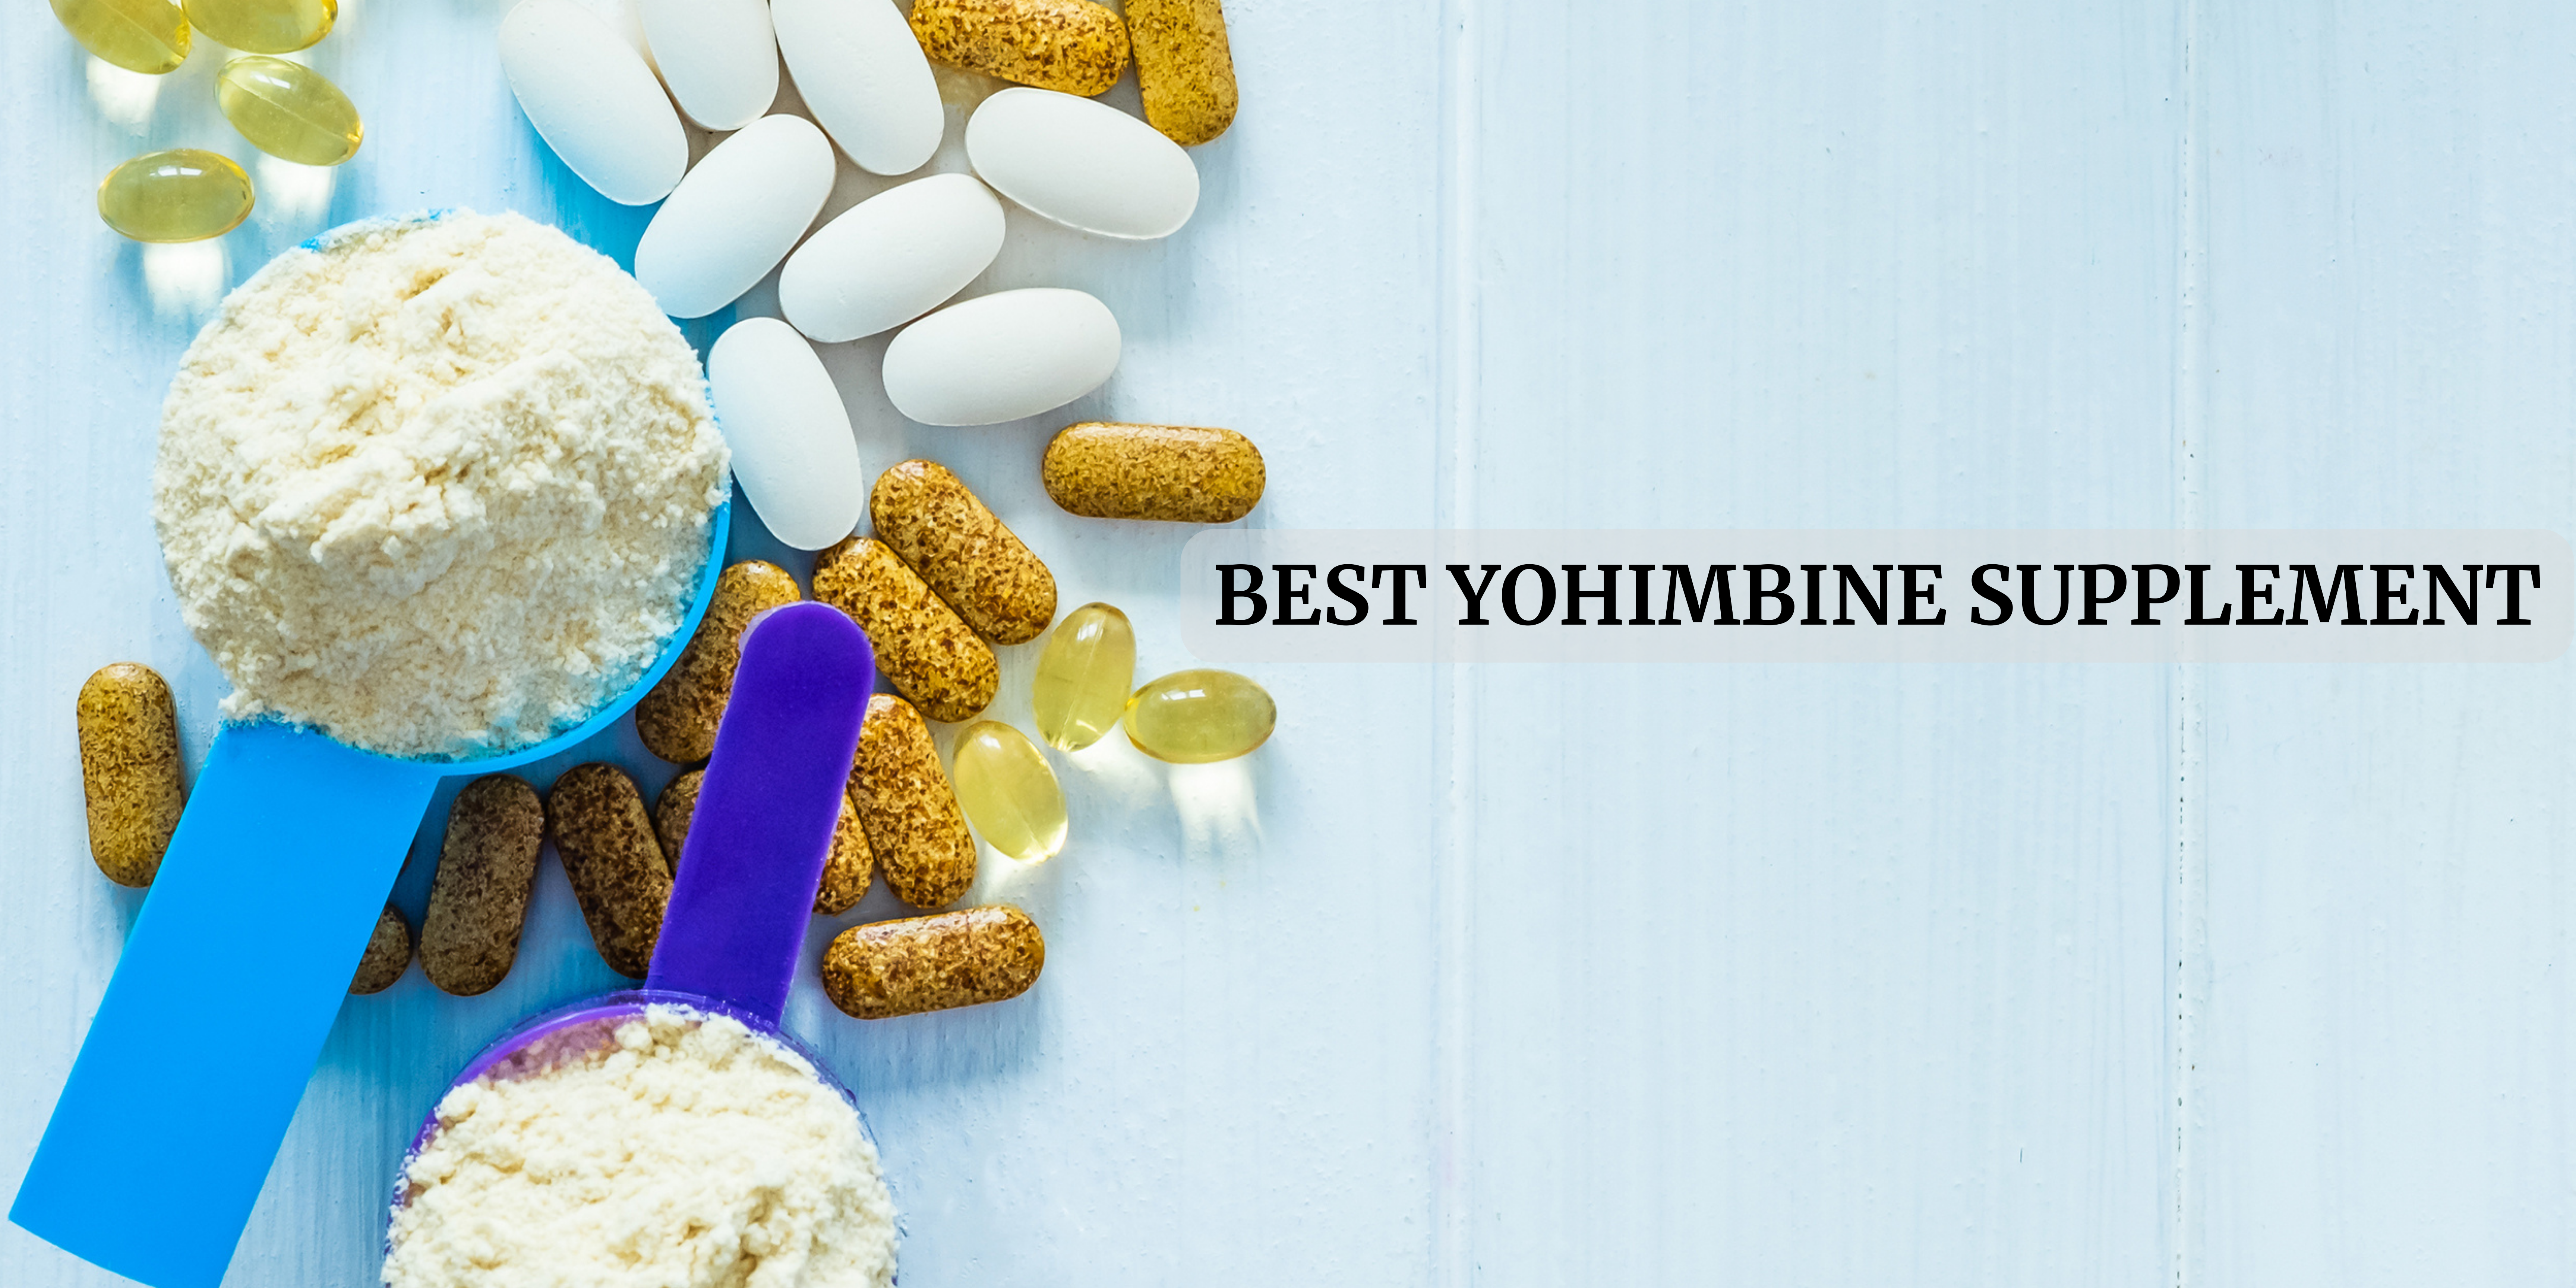 Yohimbine Supplement in the World